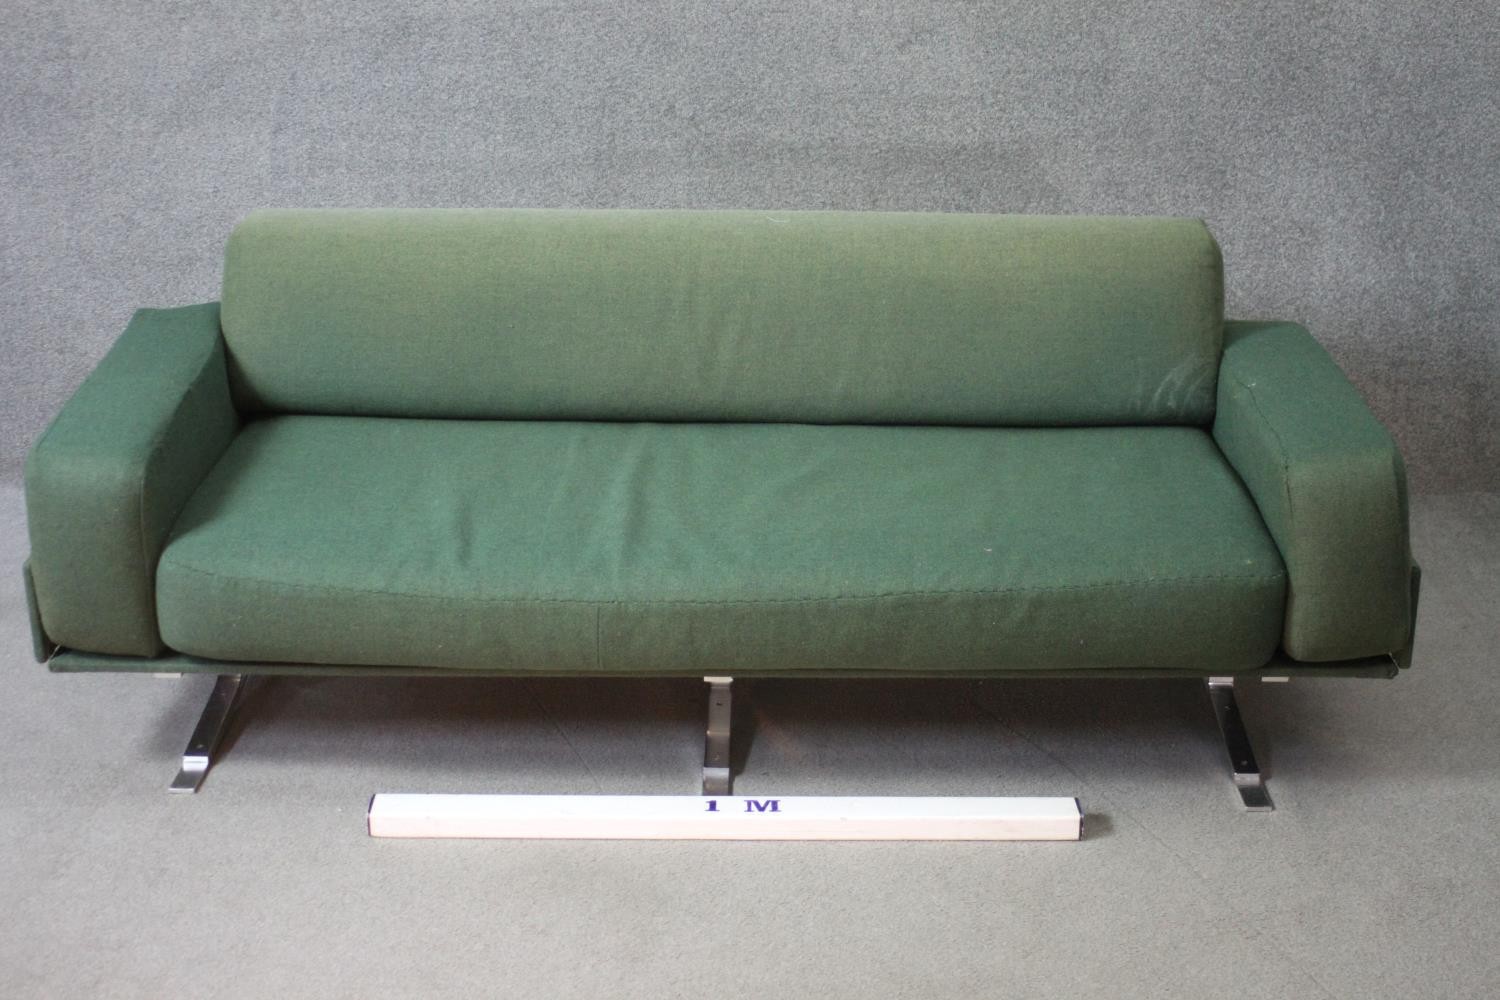 A William Plunkett sofa C.1960 in original Harris Tweed upholstery on polished aluminium frame. - Image 3 of 7